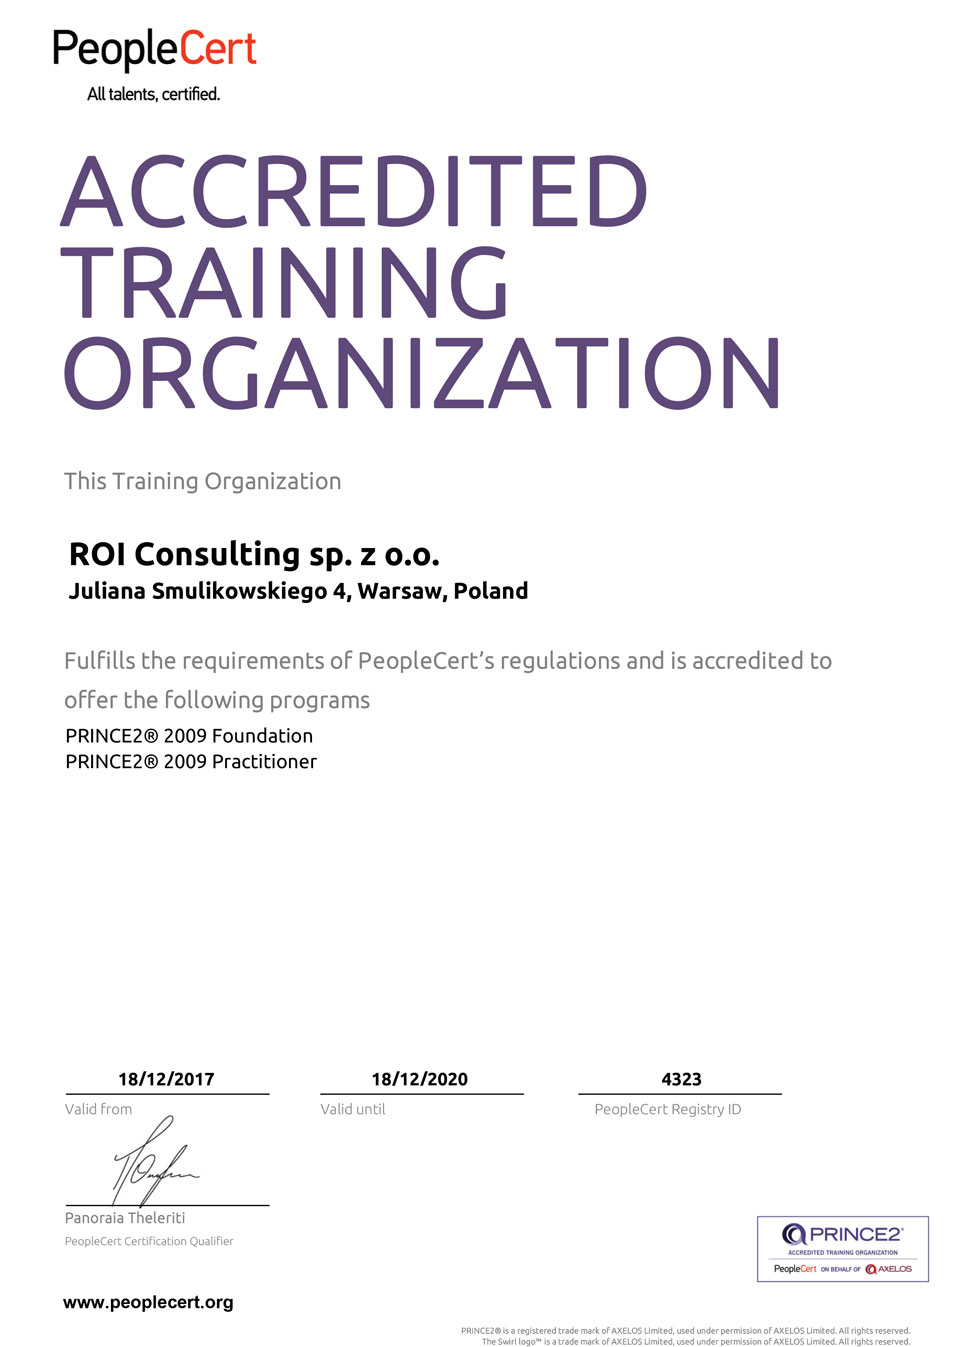 Accredited Training Organization PRINCE2